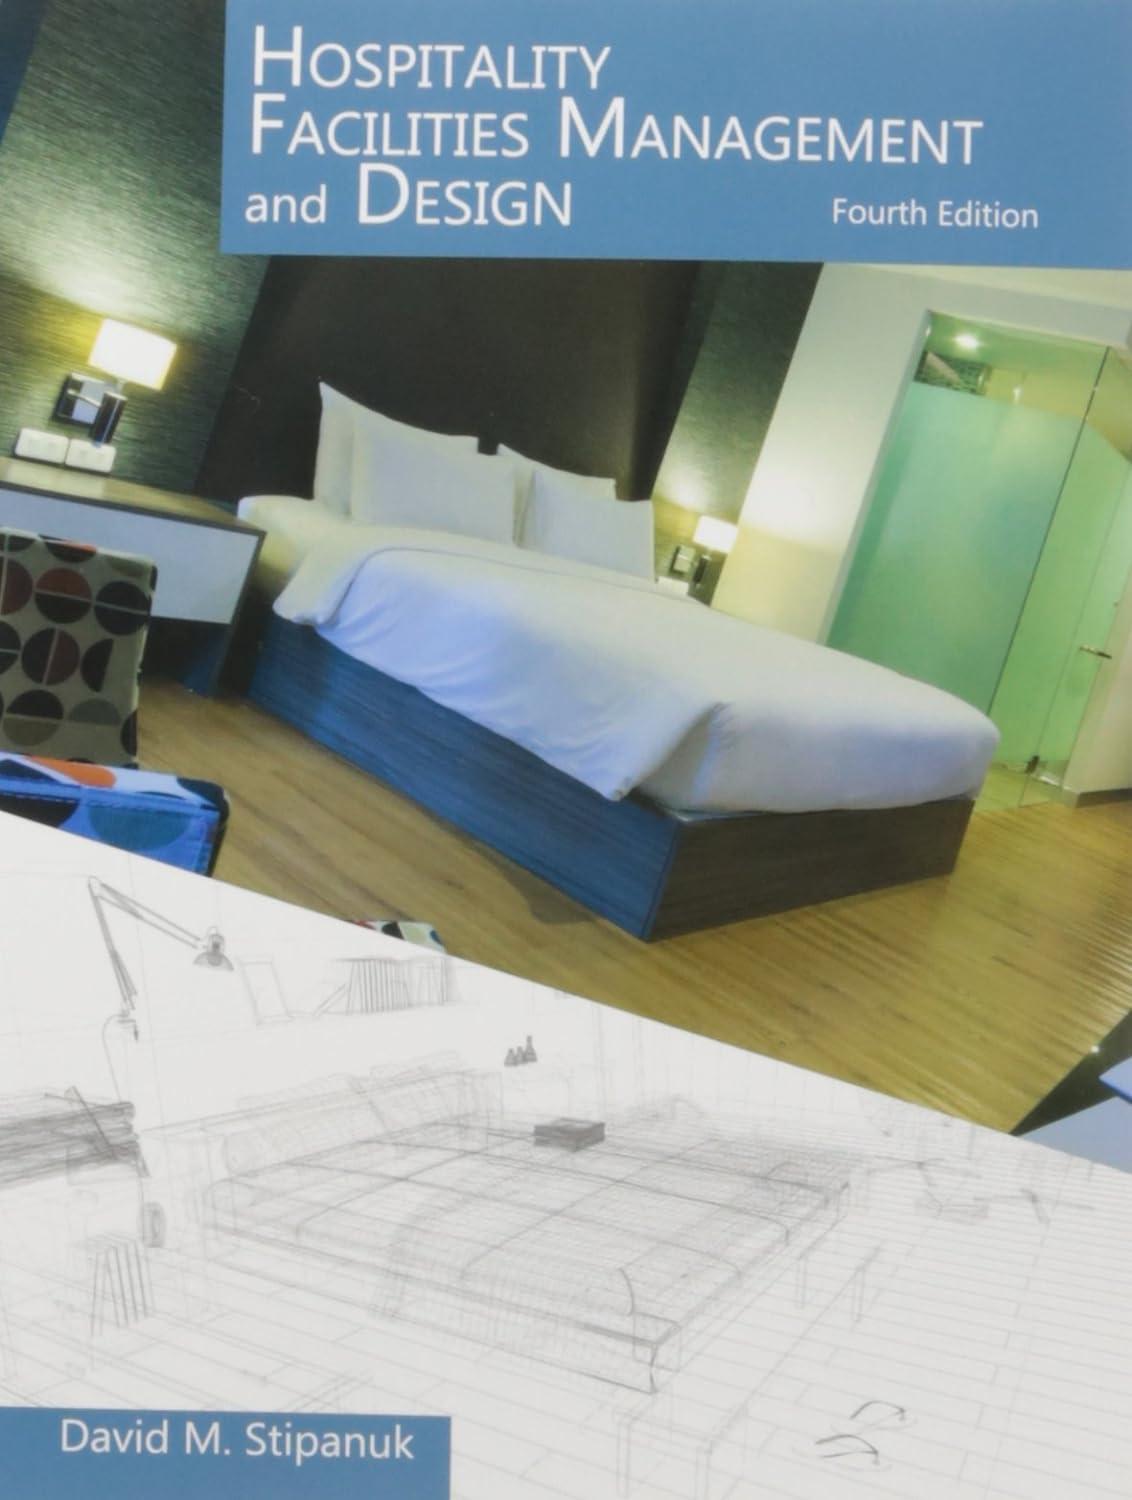 hospitality facilities management and design 1st edition david m stipanuk 0866124764, 978-0866124768